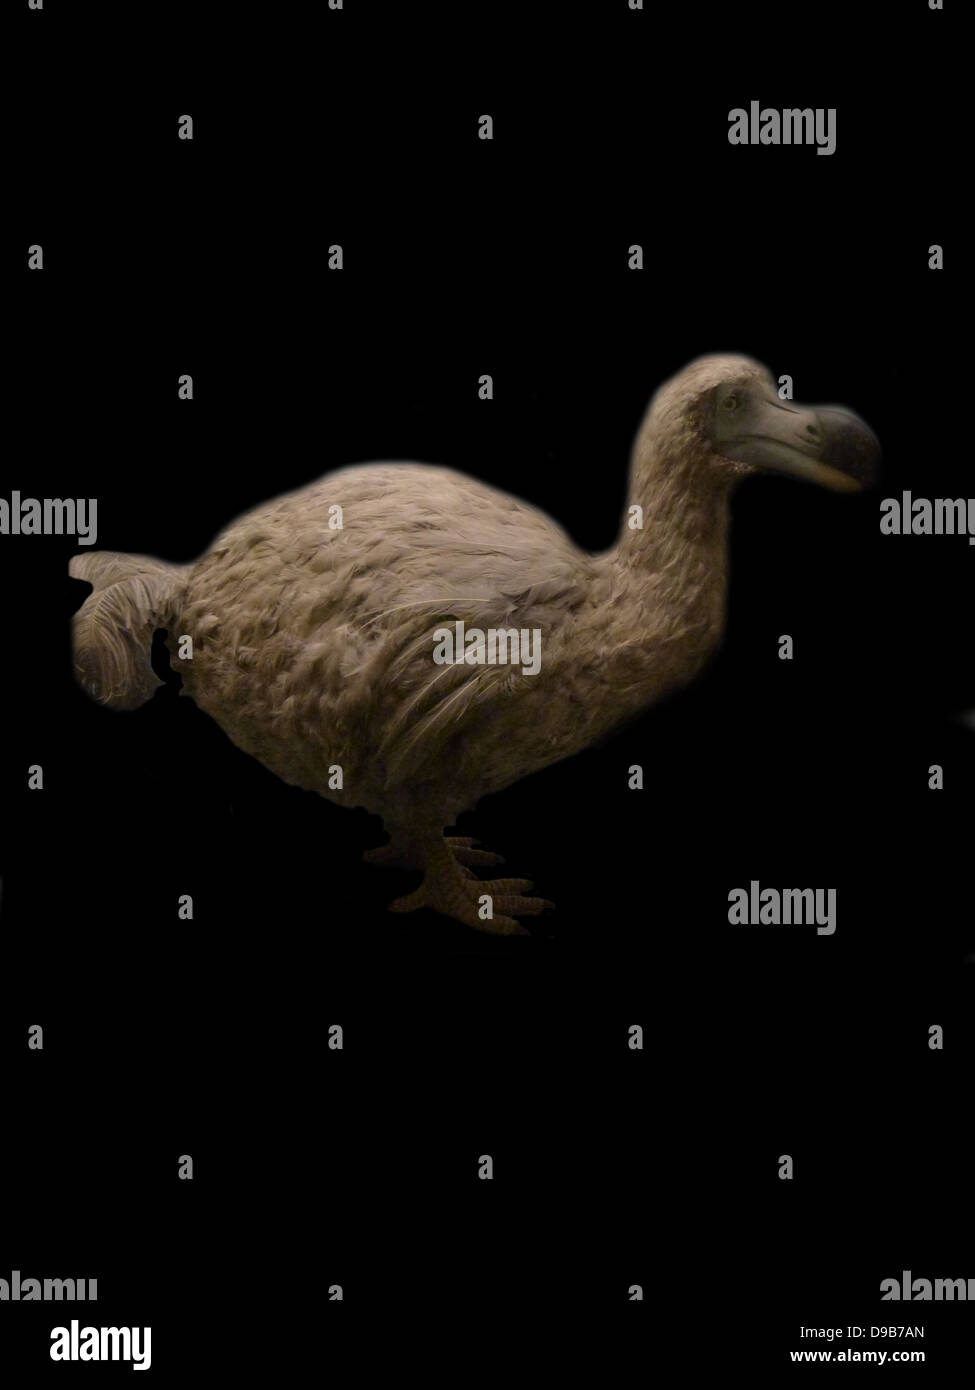 Model of Reunion Island Dodo (Raphus solitarius - extinct)  A close relative of the Mauritius Dodo, the Reunion Island Dodo is known only from pictorial records.  This image is not a real specimen. Stock Photo